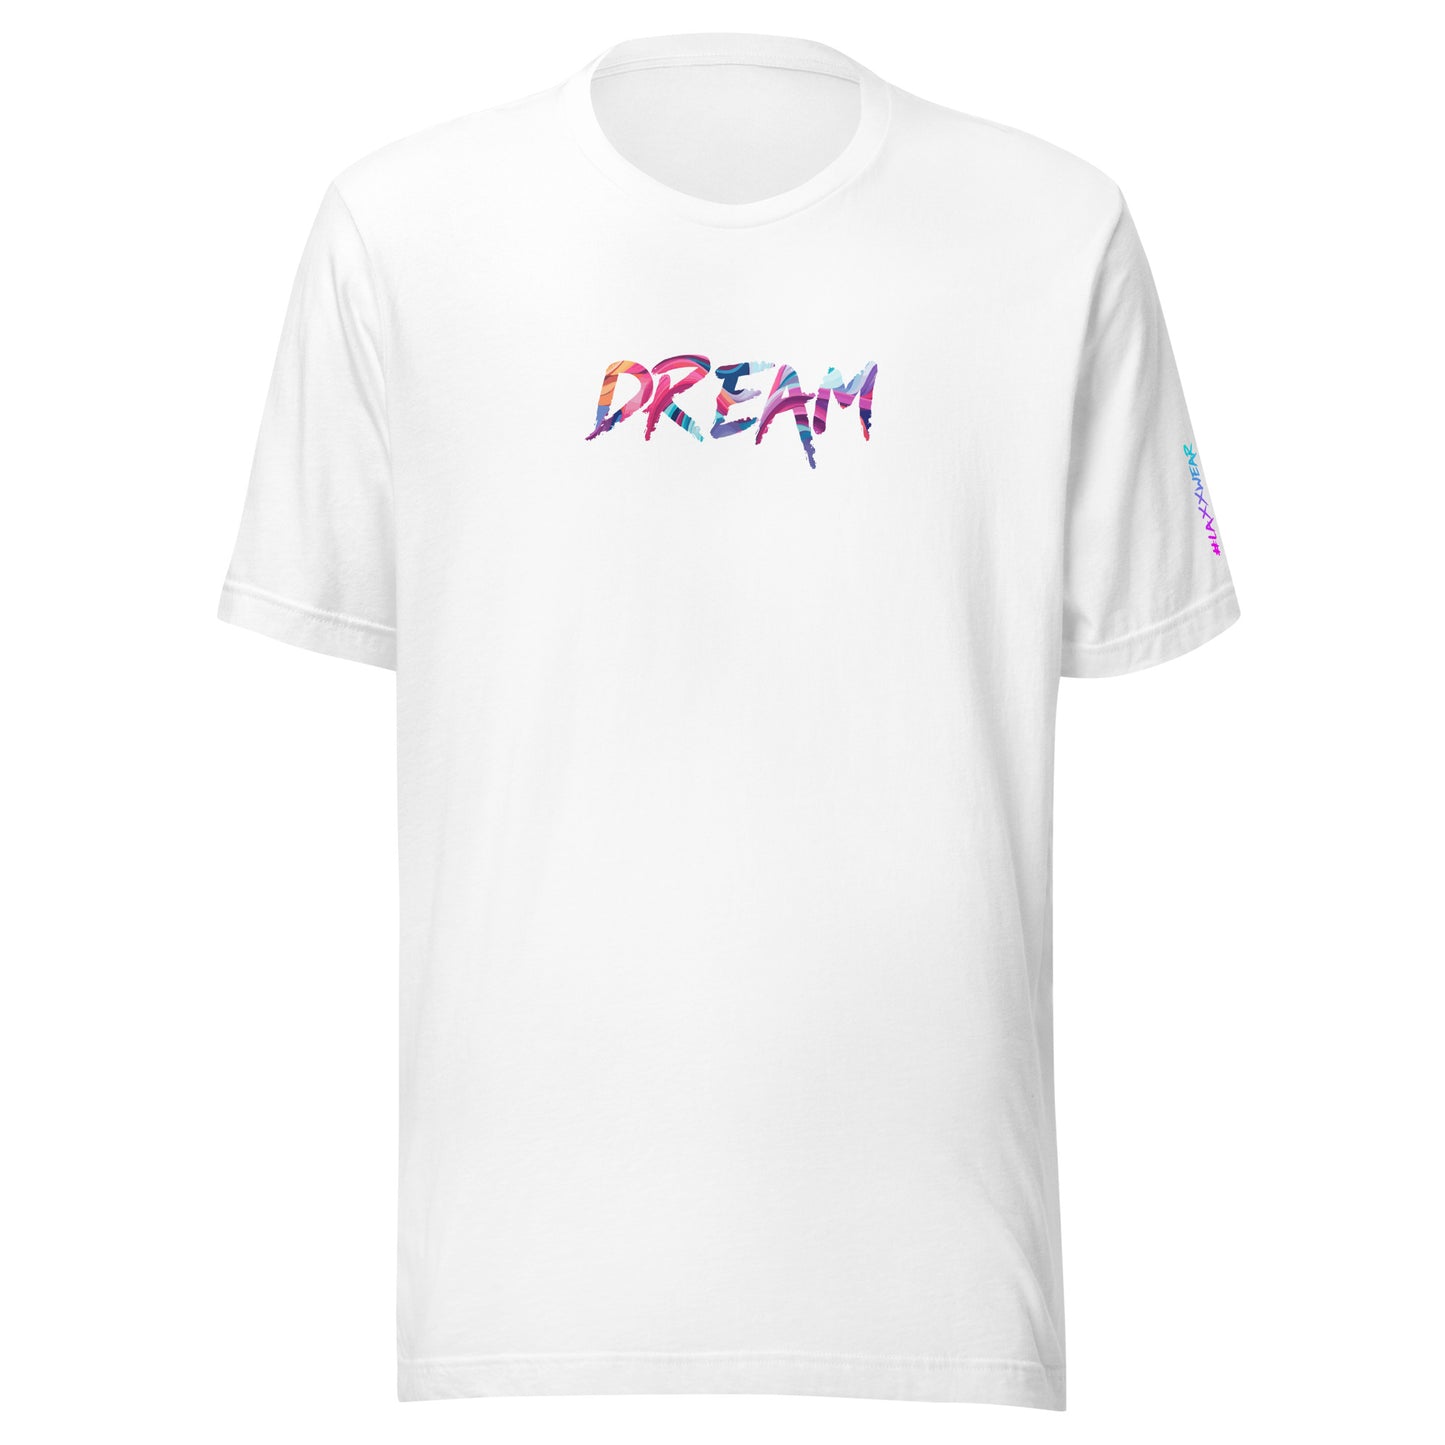 "Words of Encouragement" T-Shirt - Dream Q323